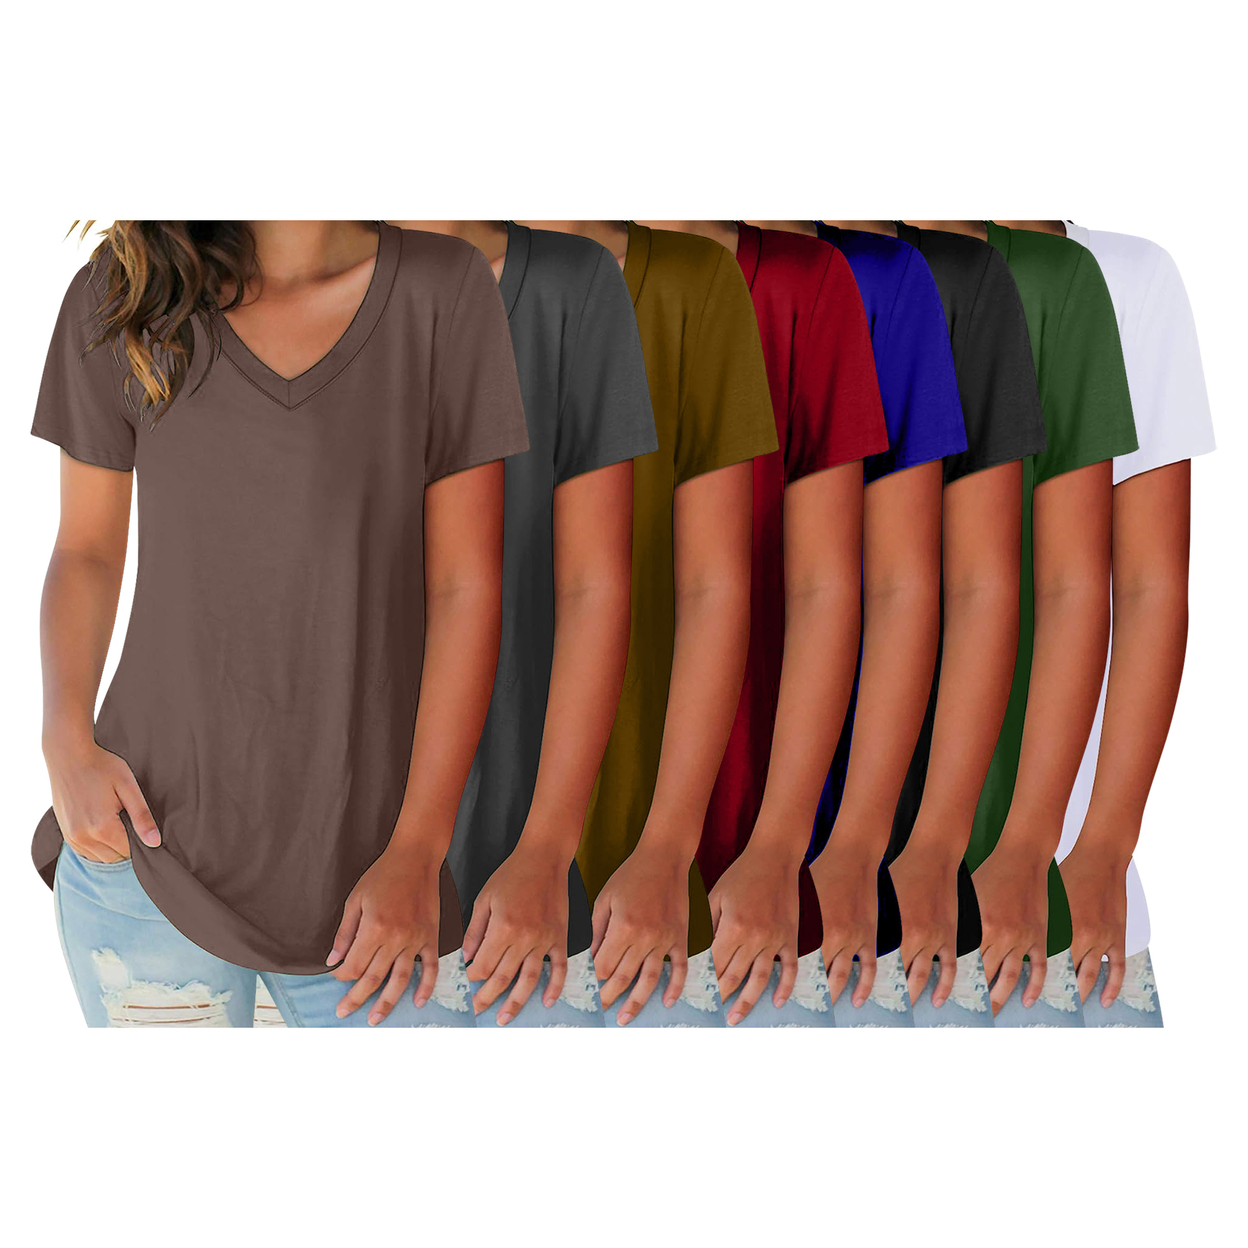 2-Pack: Women's Ultra Soft Smooth Cotton Blend Basic V-Neck Short Sleeve Shirts - Navy & Mustard, Medium